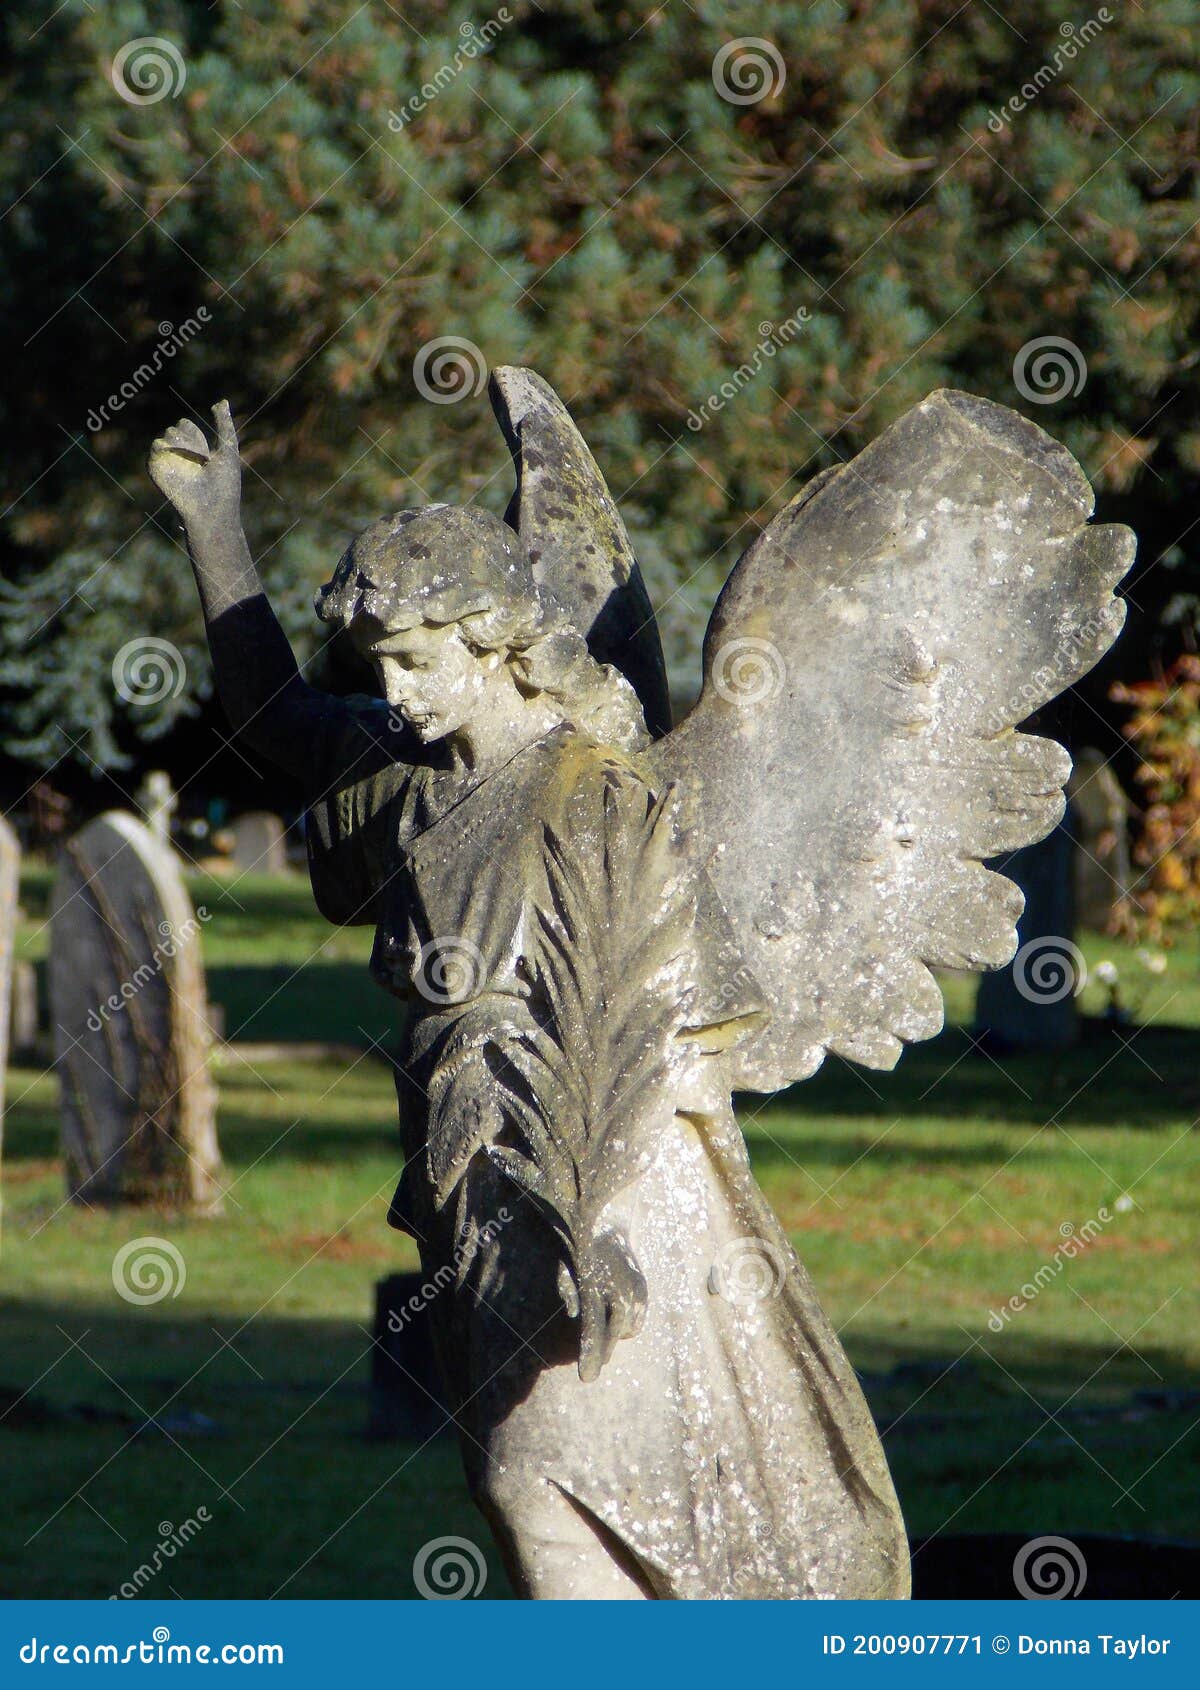 Fotos gratis : Monumento, estatua, cielo, cementerio, muerto, lápida ...